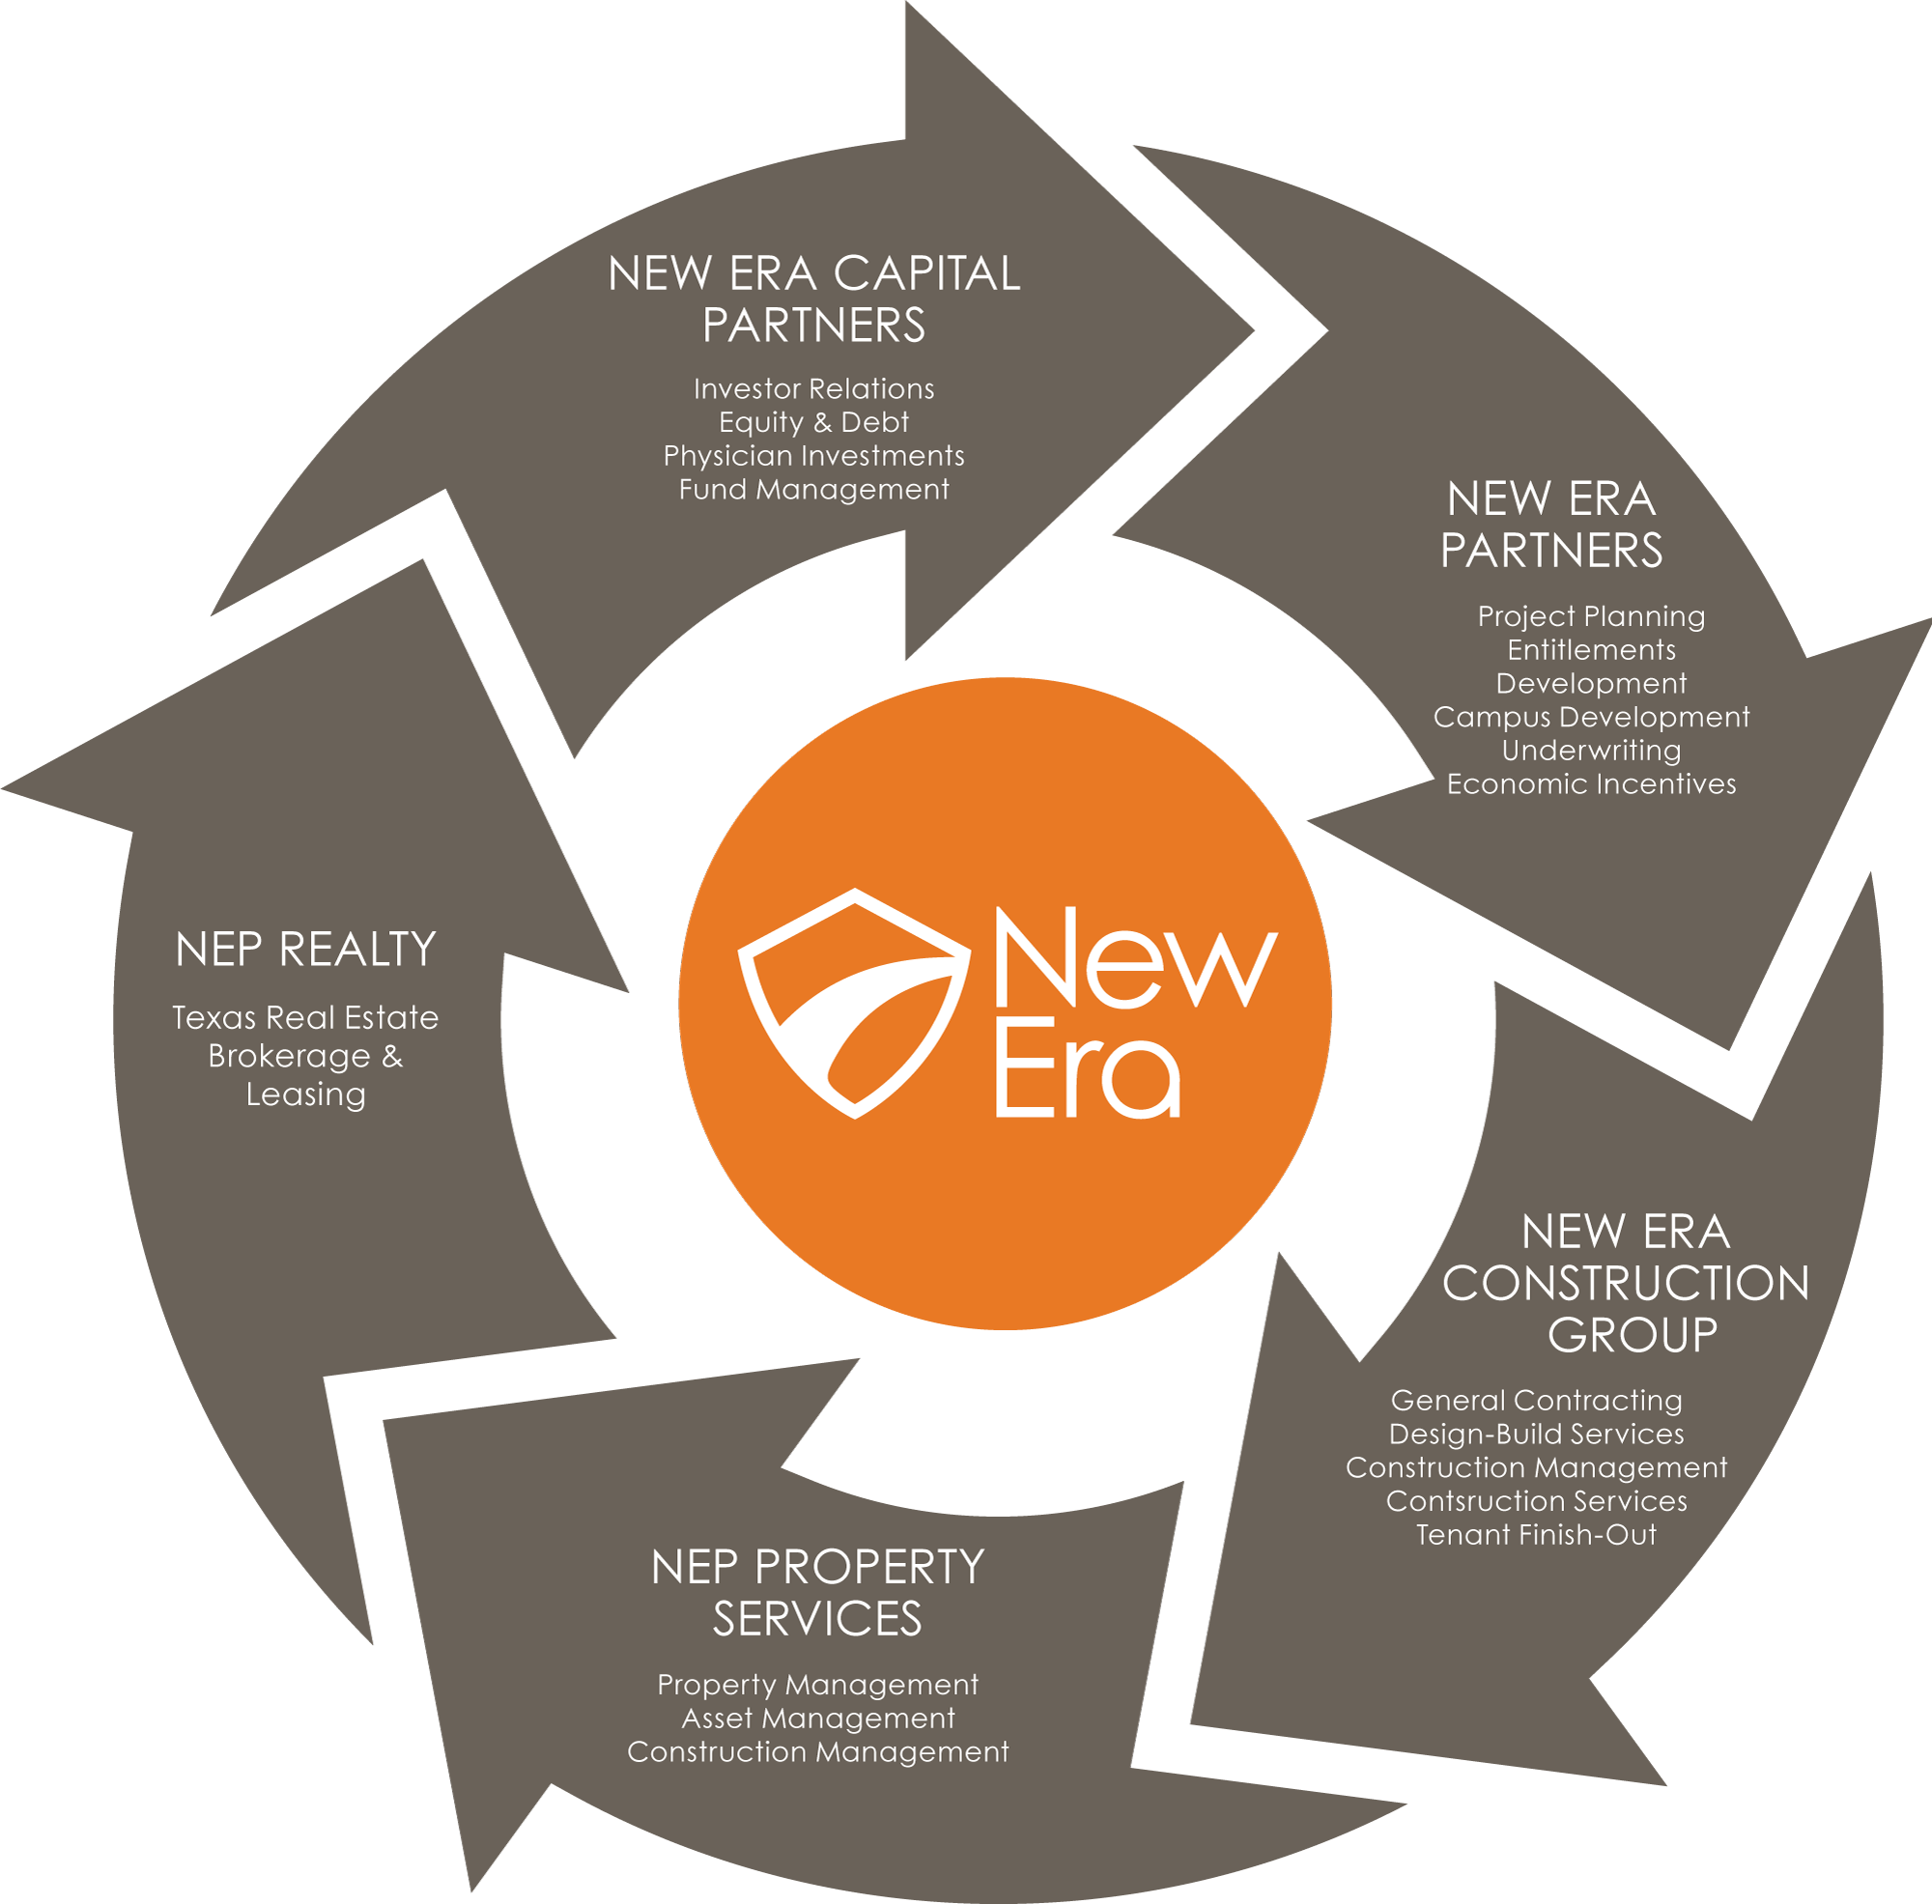 The New Era Companies Platform